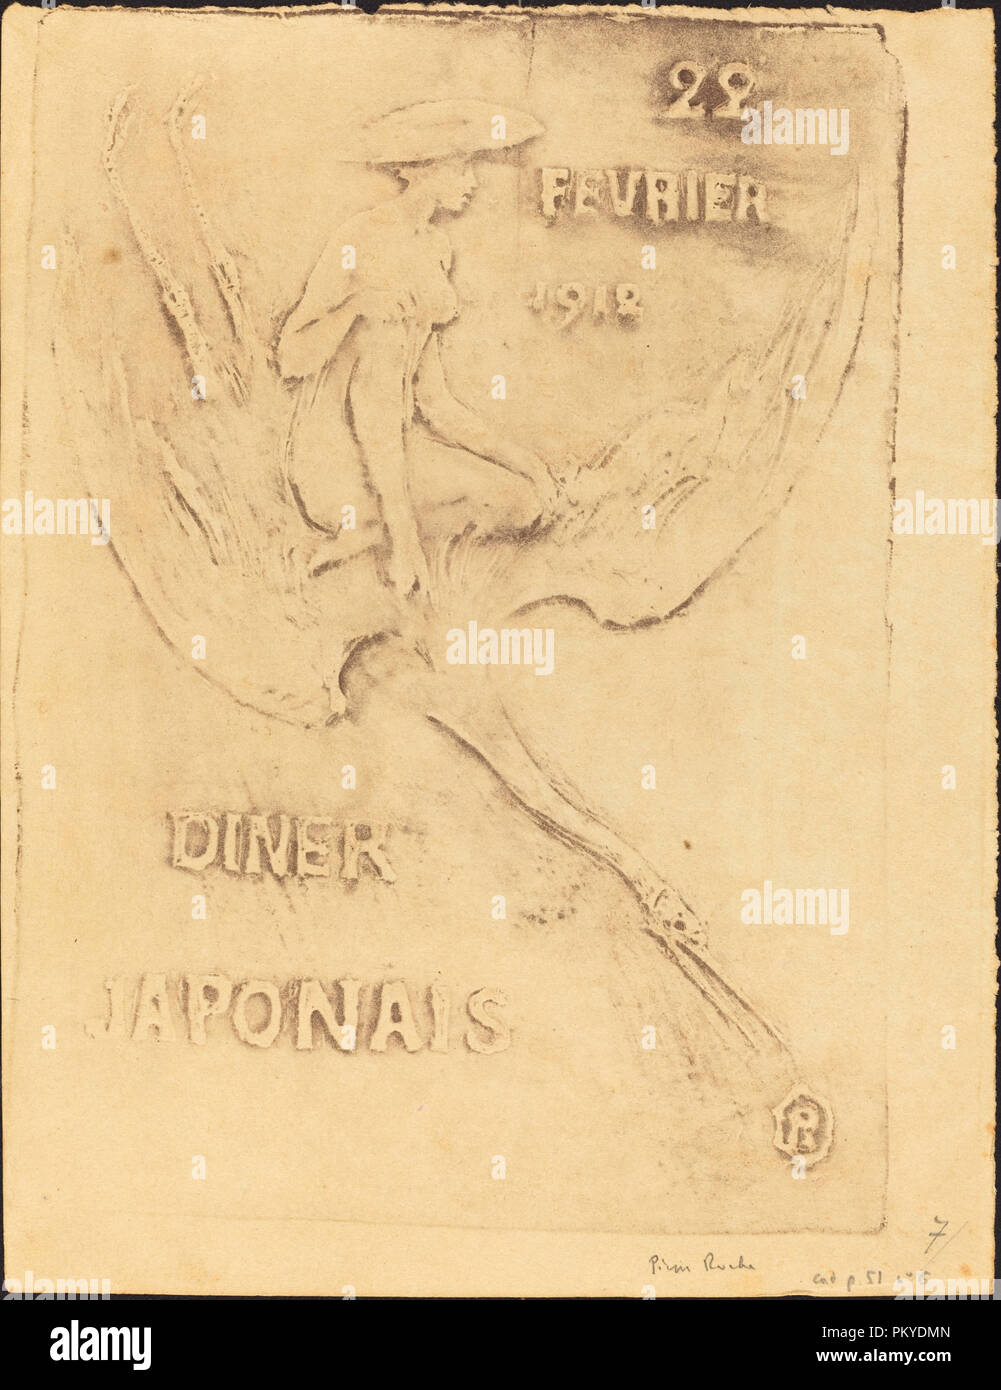 Femme et Cygne, 22 Fevrier 1912, Diner japonaise (donna e uccello, 22 febbraio 1912, J. datata: 1912. Medium: gypsograph. Museo: National Gallery of Art di Washington DC. Autore: Pierre Roche. Foto Stock